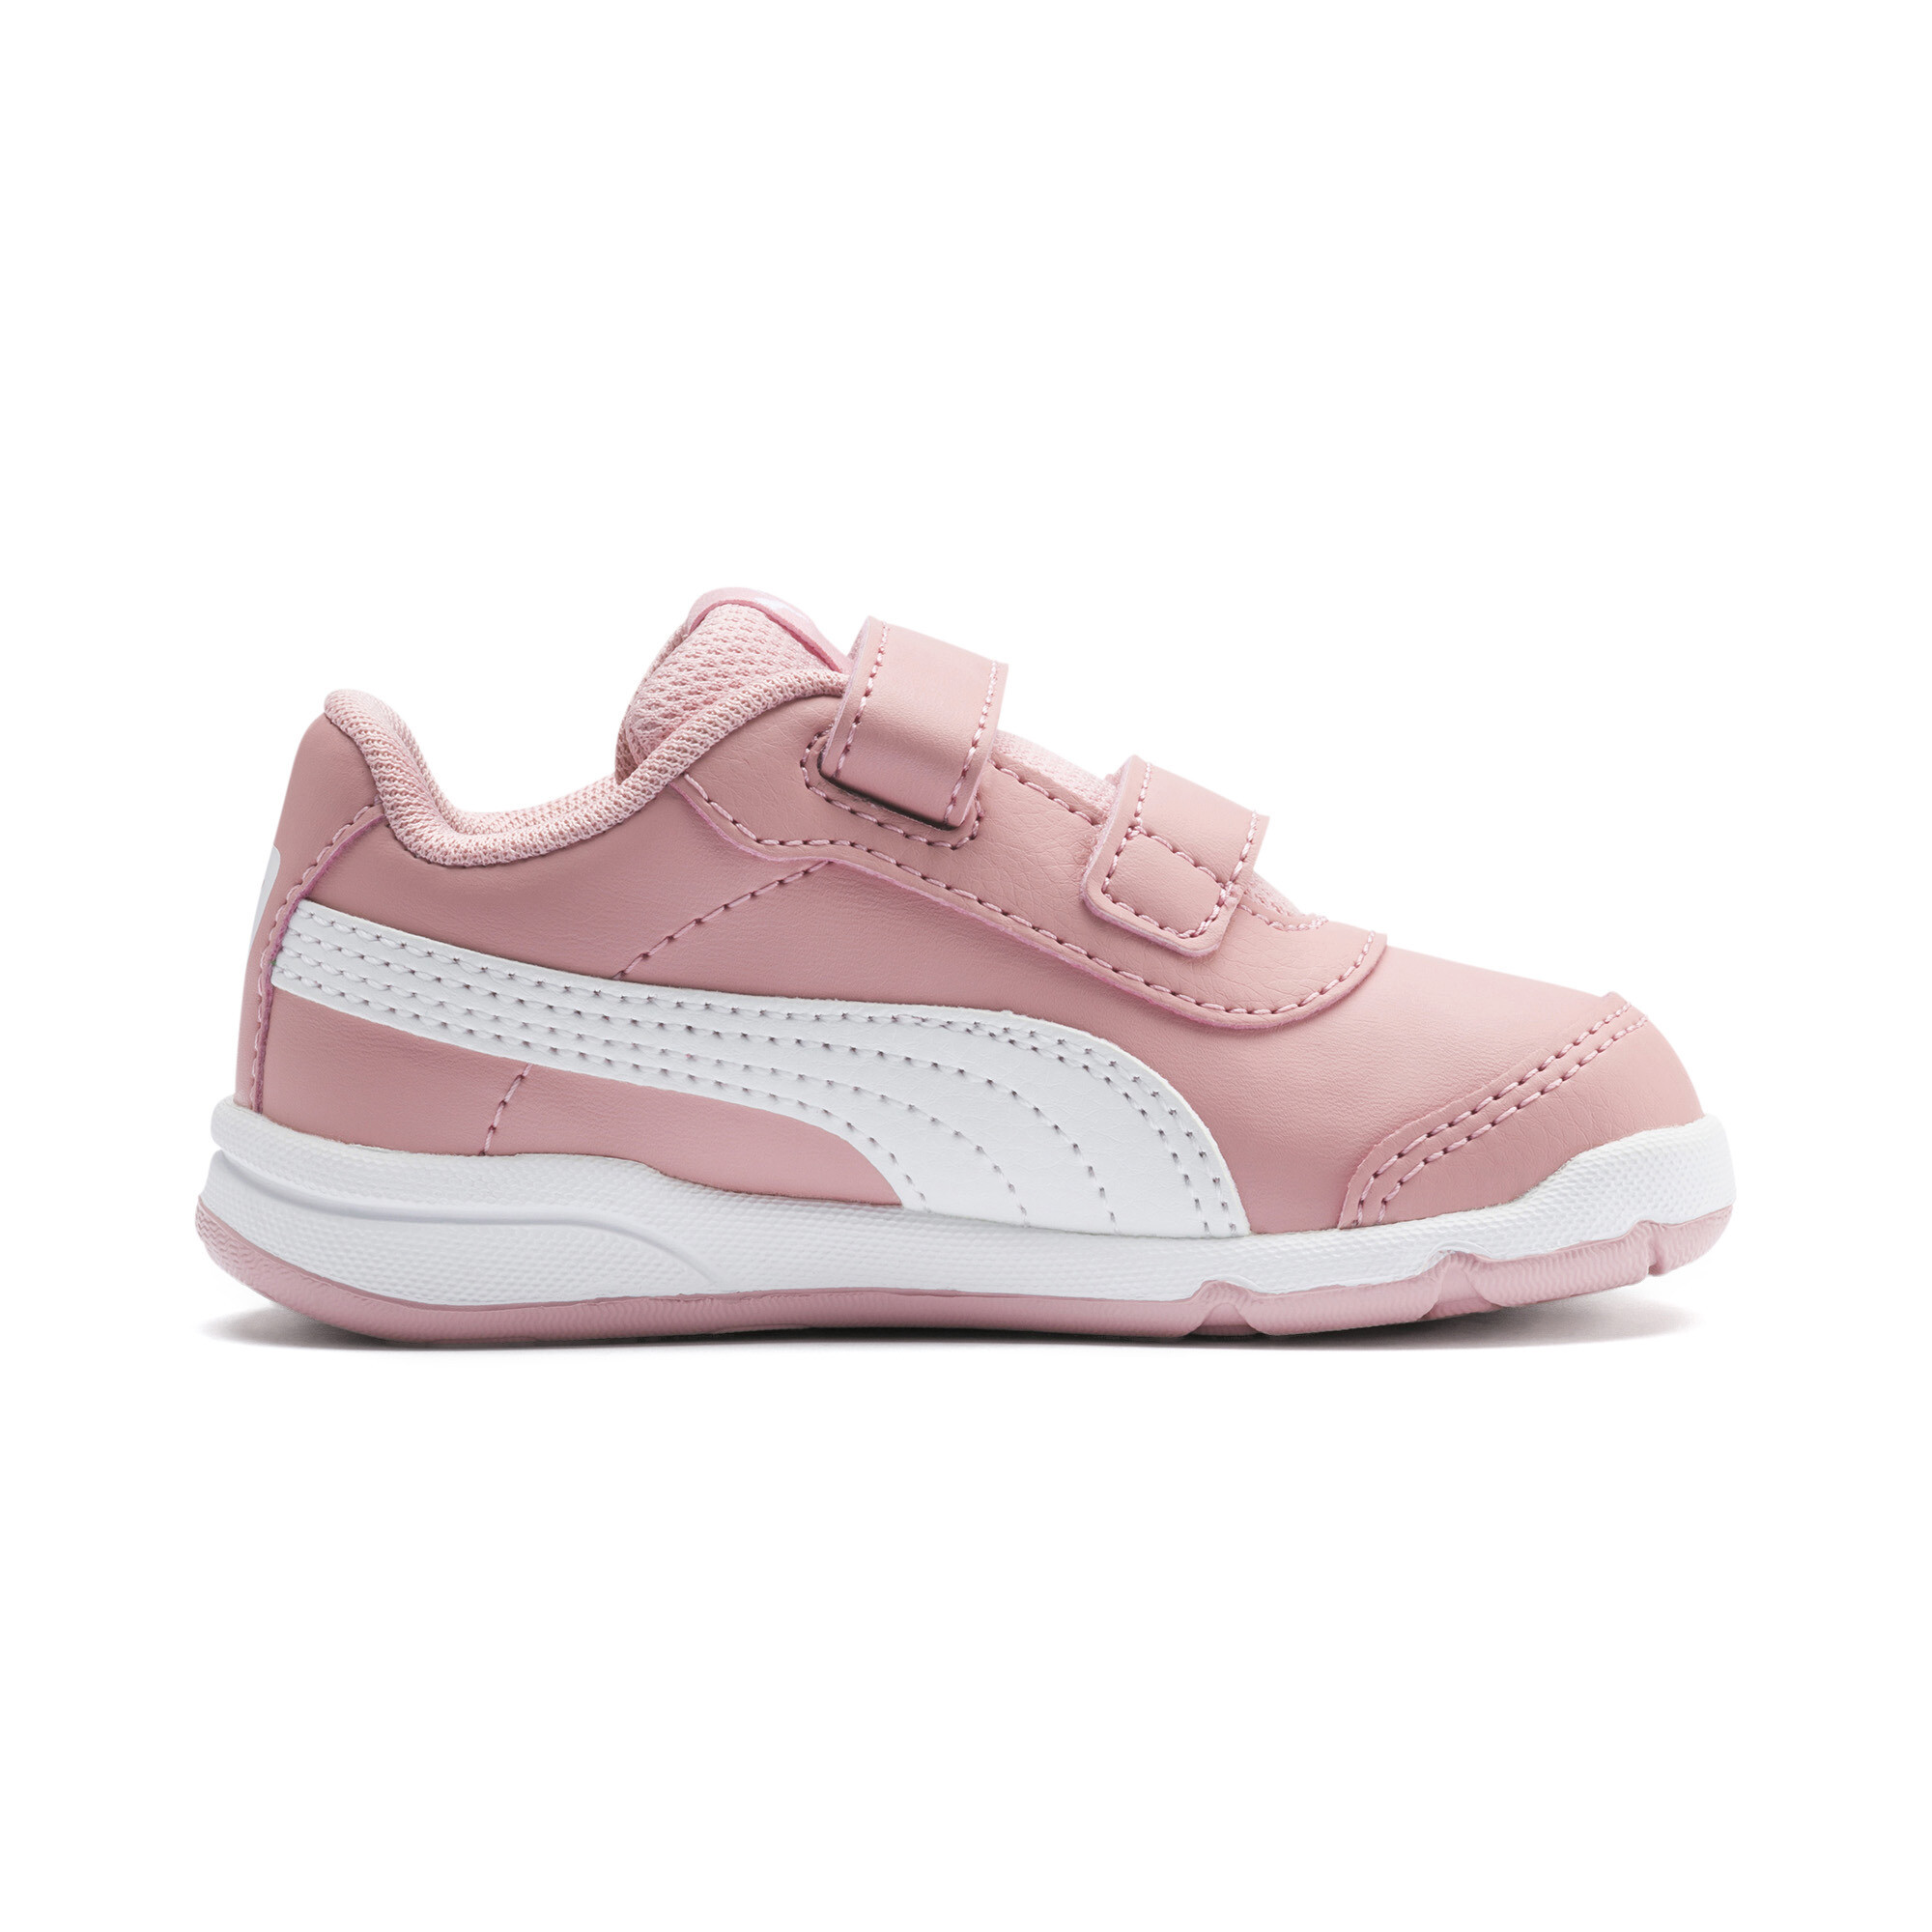 Puma Stepfleex 2 SL VE V Babies' Trainers, Pink, Size 21, Shoes